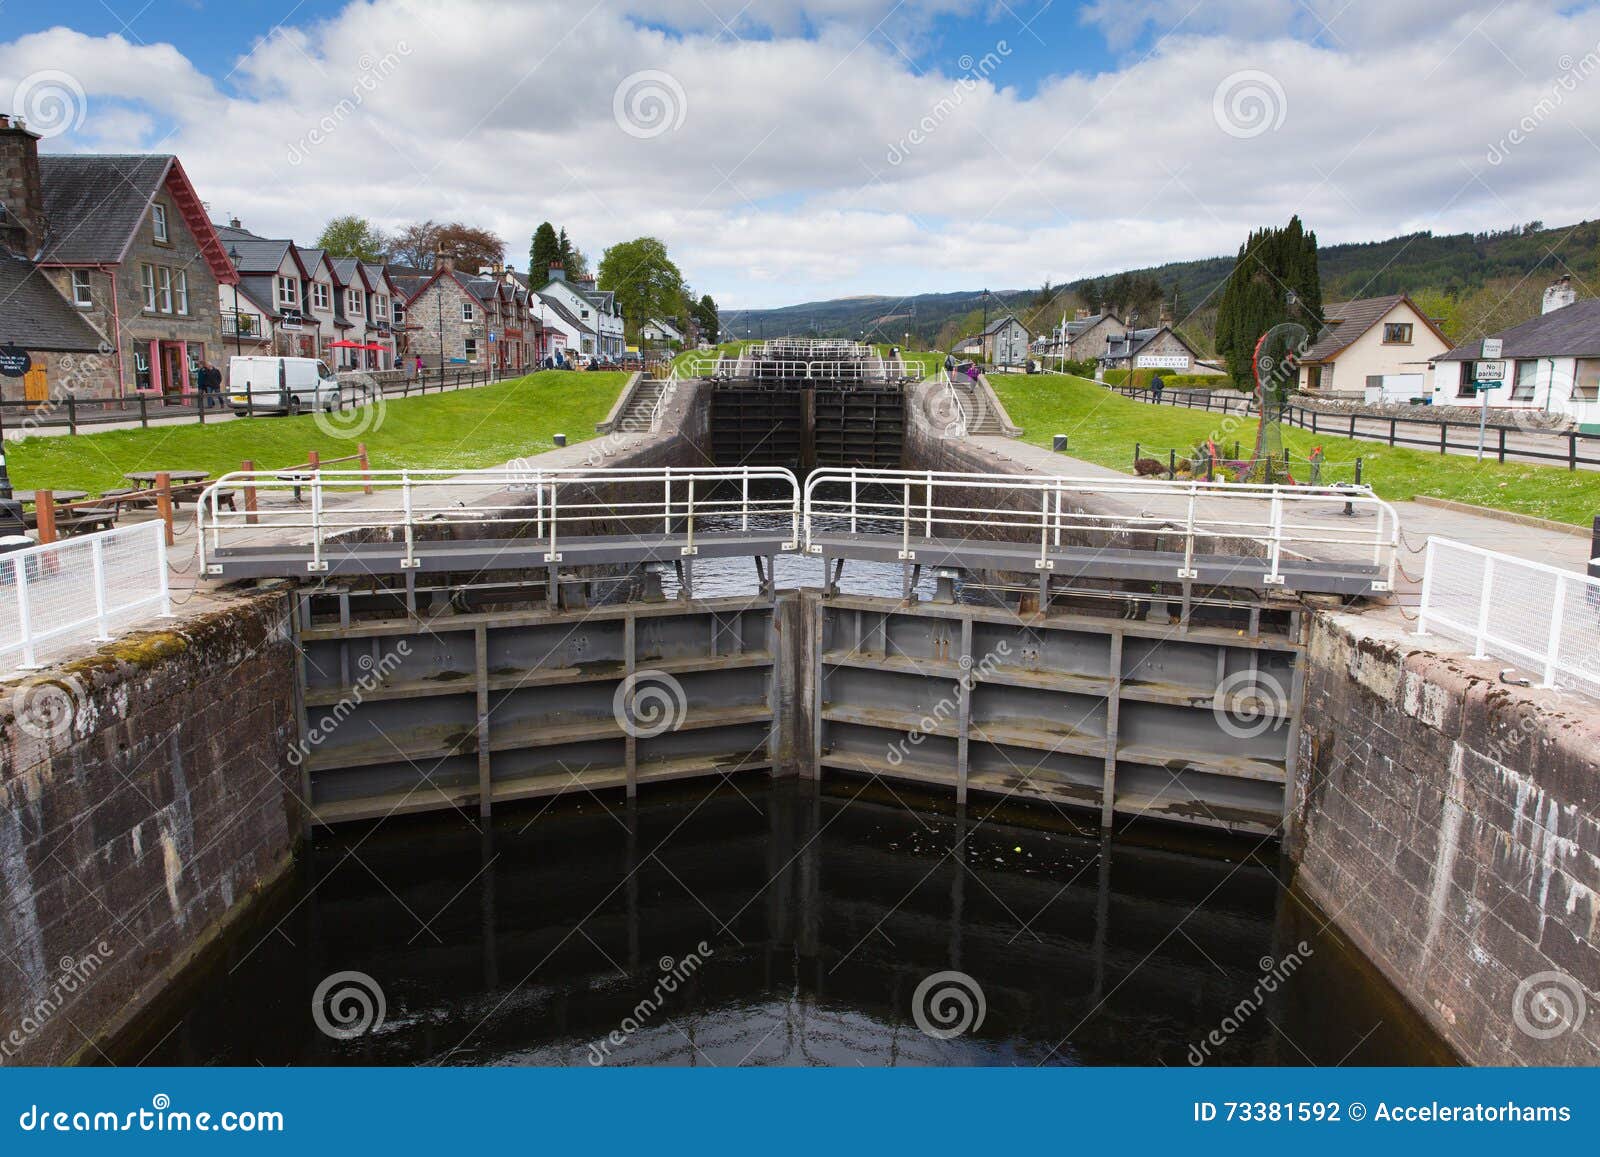 Canal Lock And Bridge In United Kingdom Stock Image ...